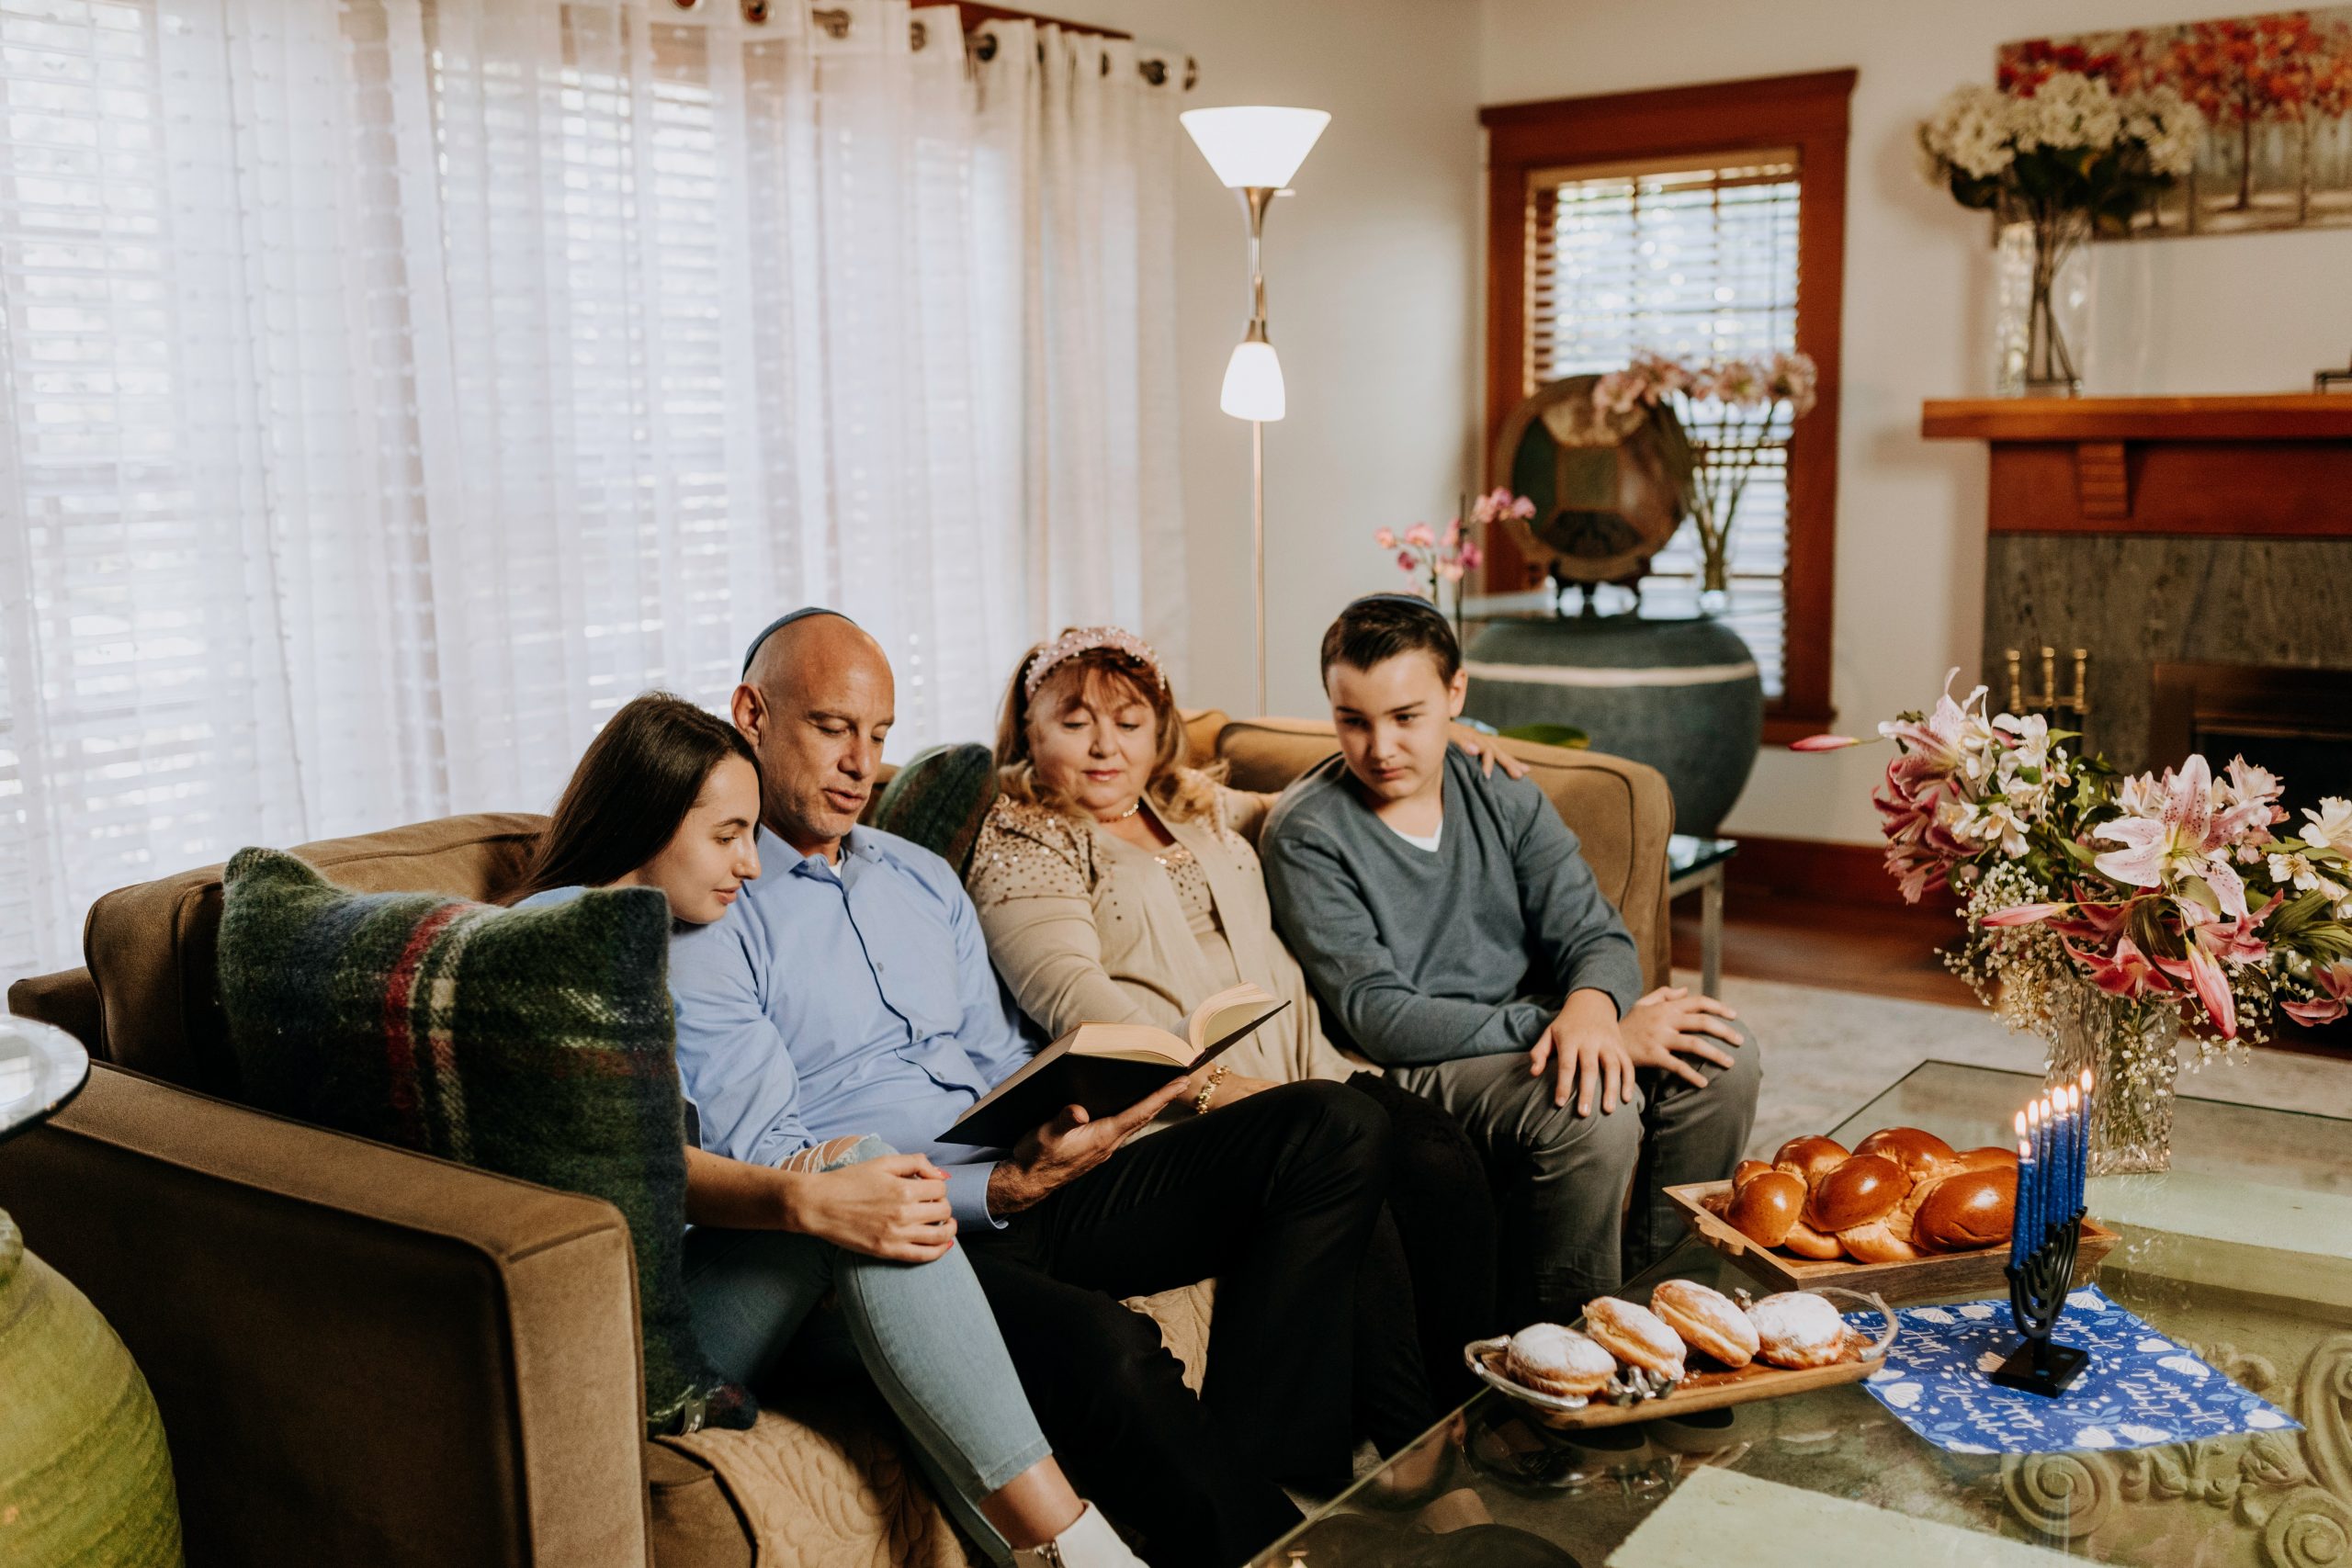 A Jewish family gather around a copy of the Torah on a sofa.